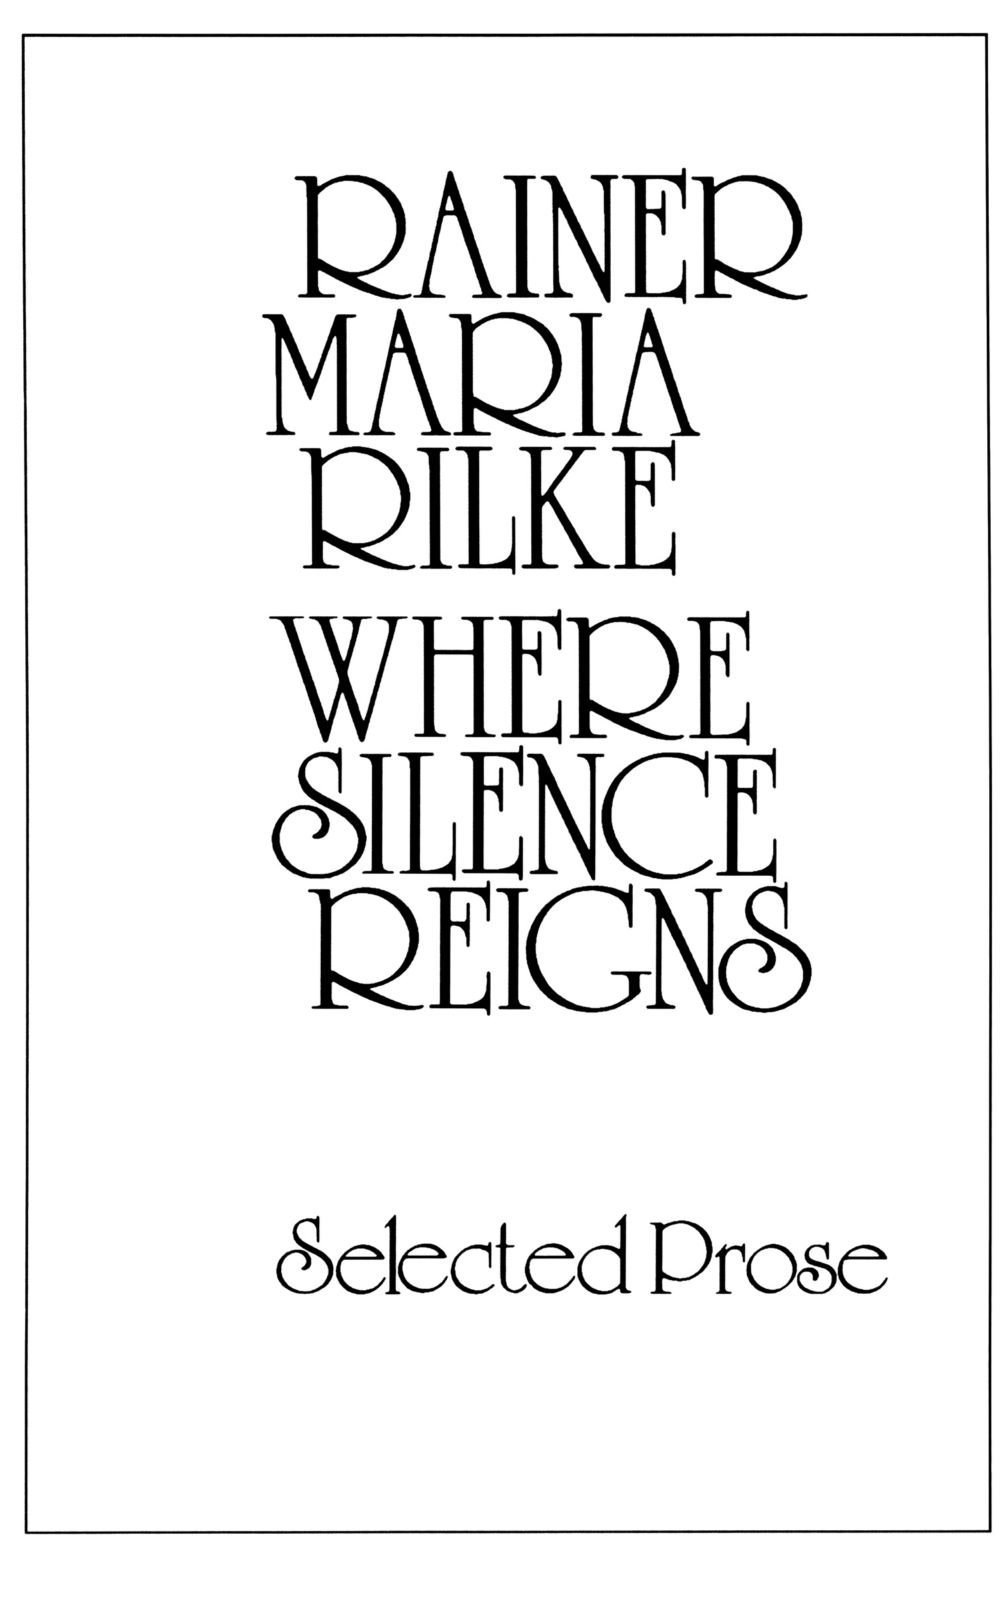 Where Silence Reigns by Rainer Rilke